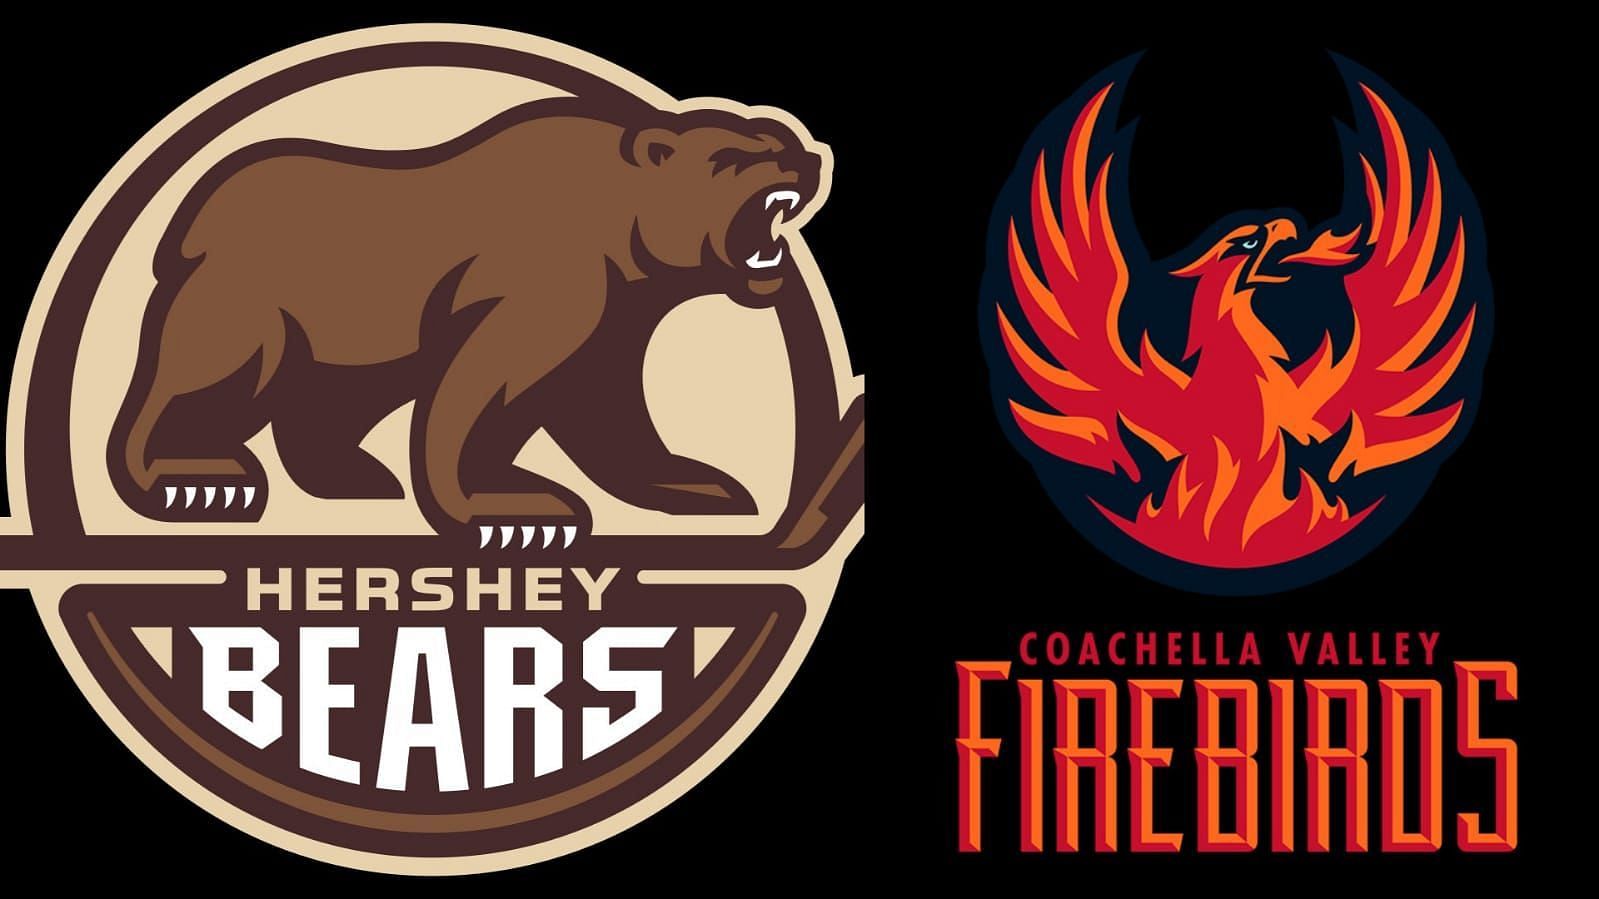 Hershey Bears vs Coachella Valley Firebirds Game 3 Preview